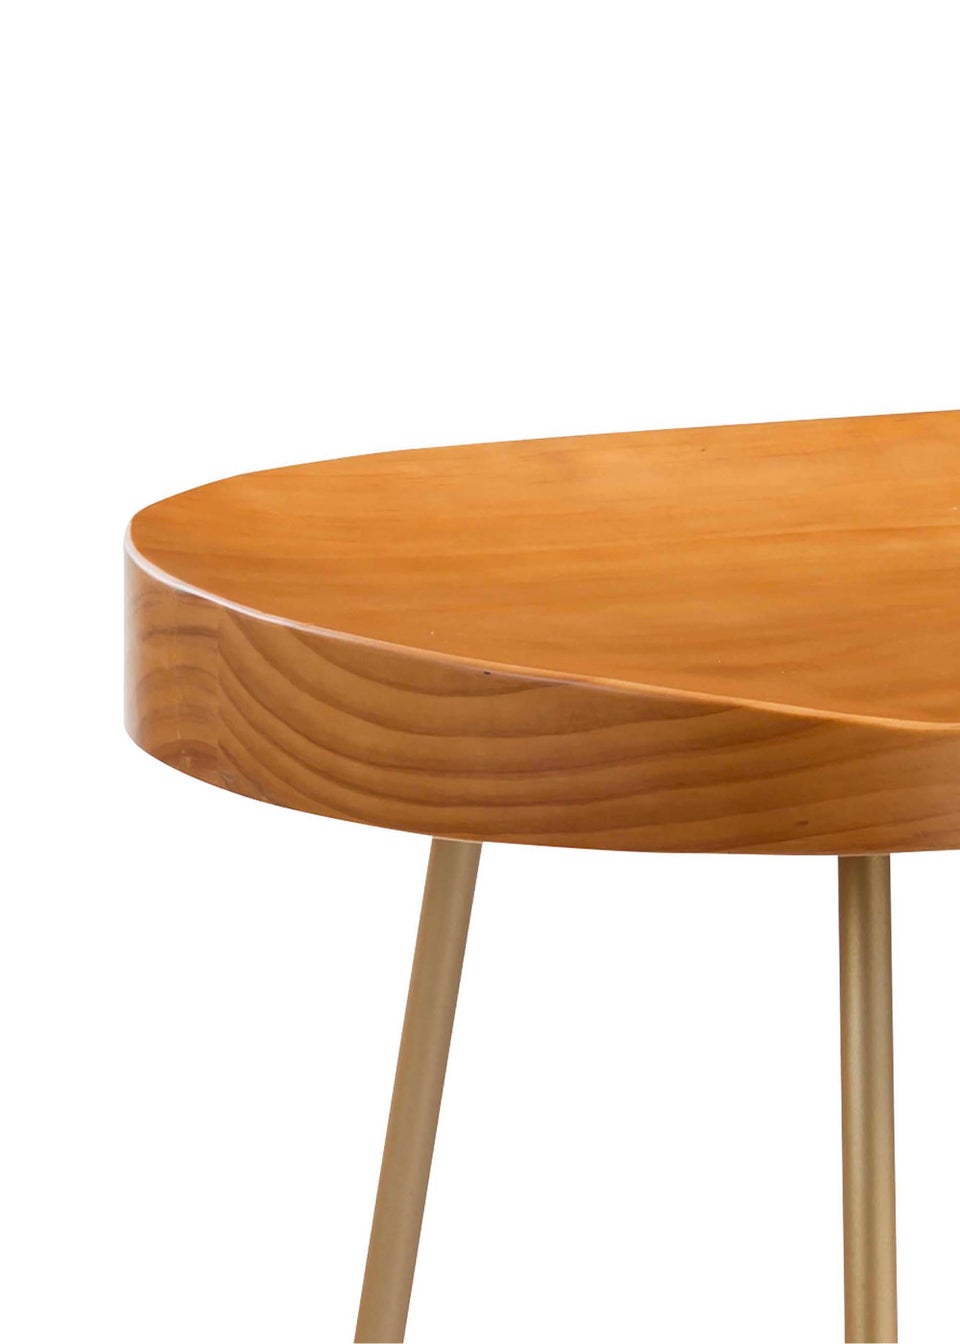 LPD Furniture Bailey Pine Wood Seat Gold Effect Leg Bar Stool (760x455x475mm)